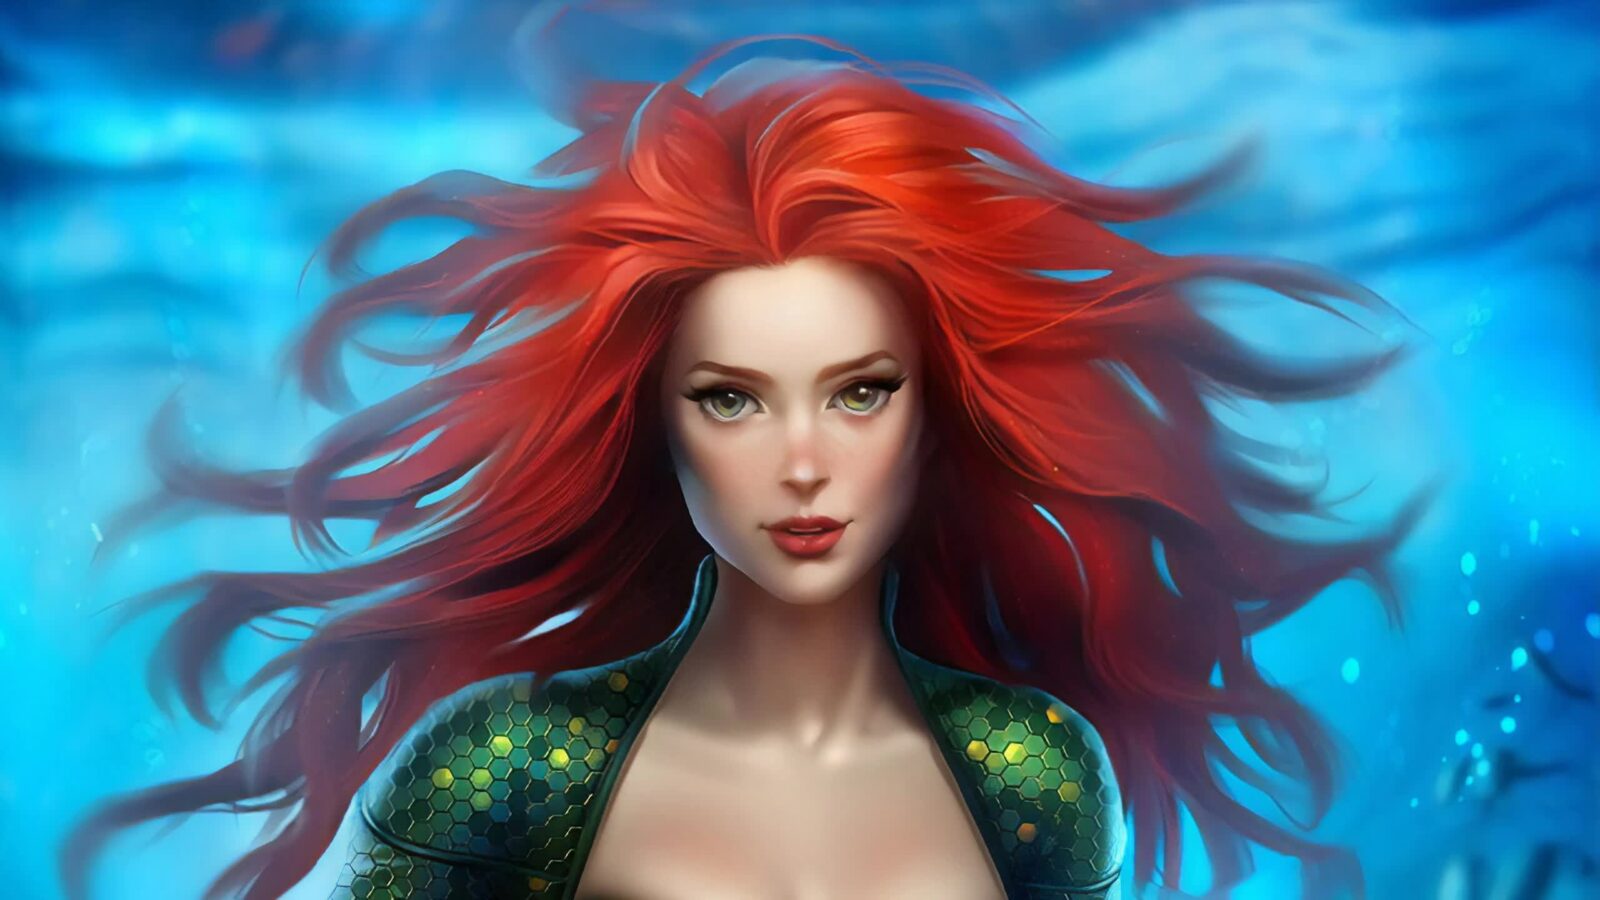 Mera Fanart Redhead 2K Quality - Free Live Wallpaper - Live Desktop